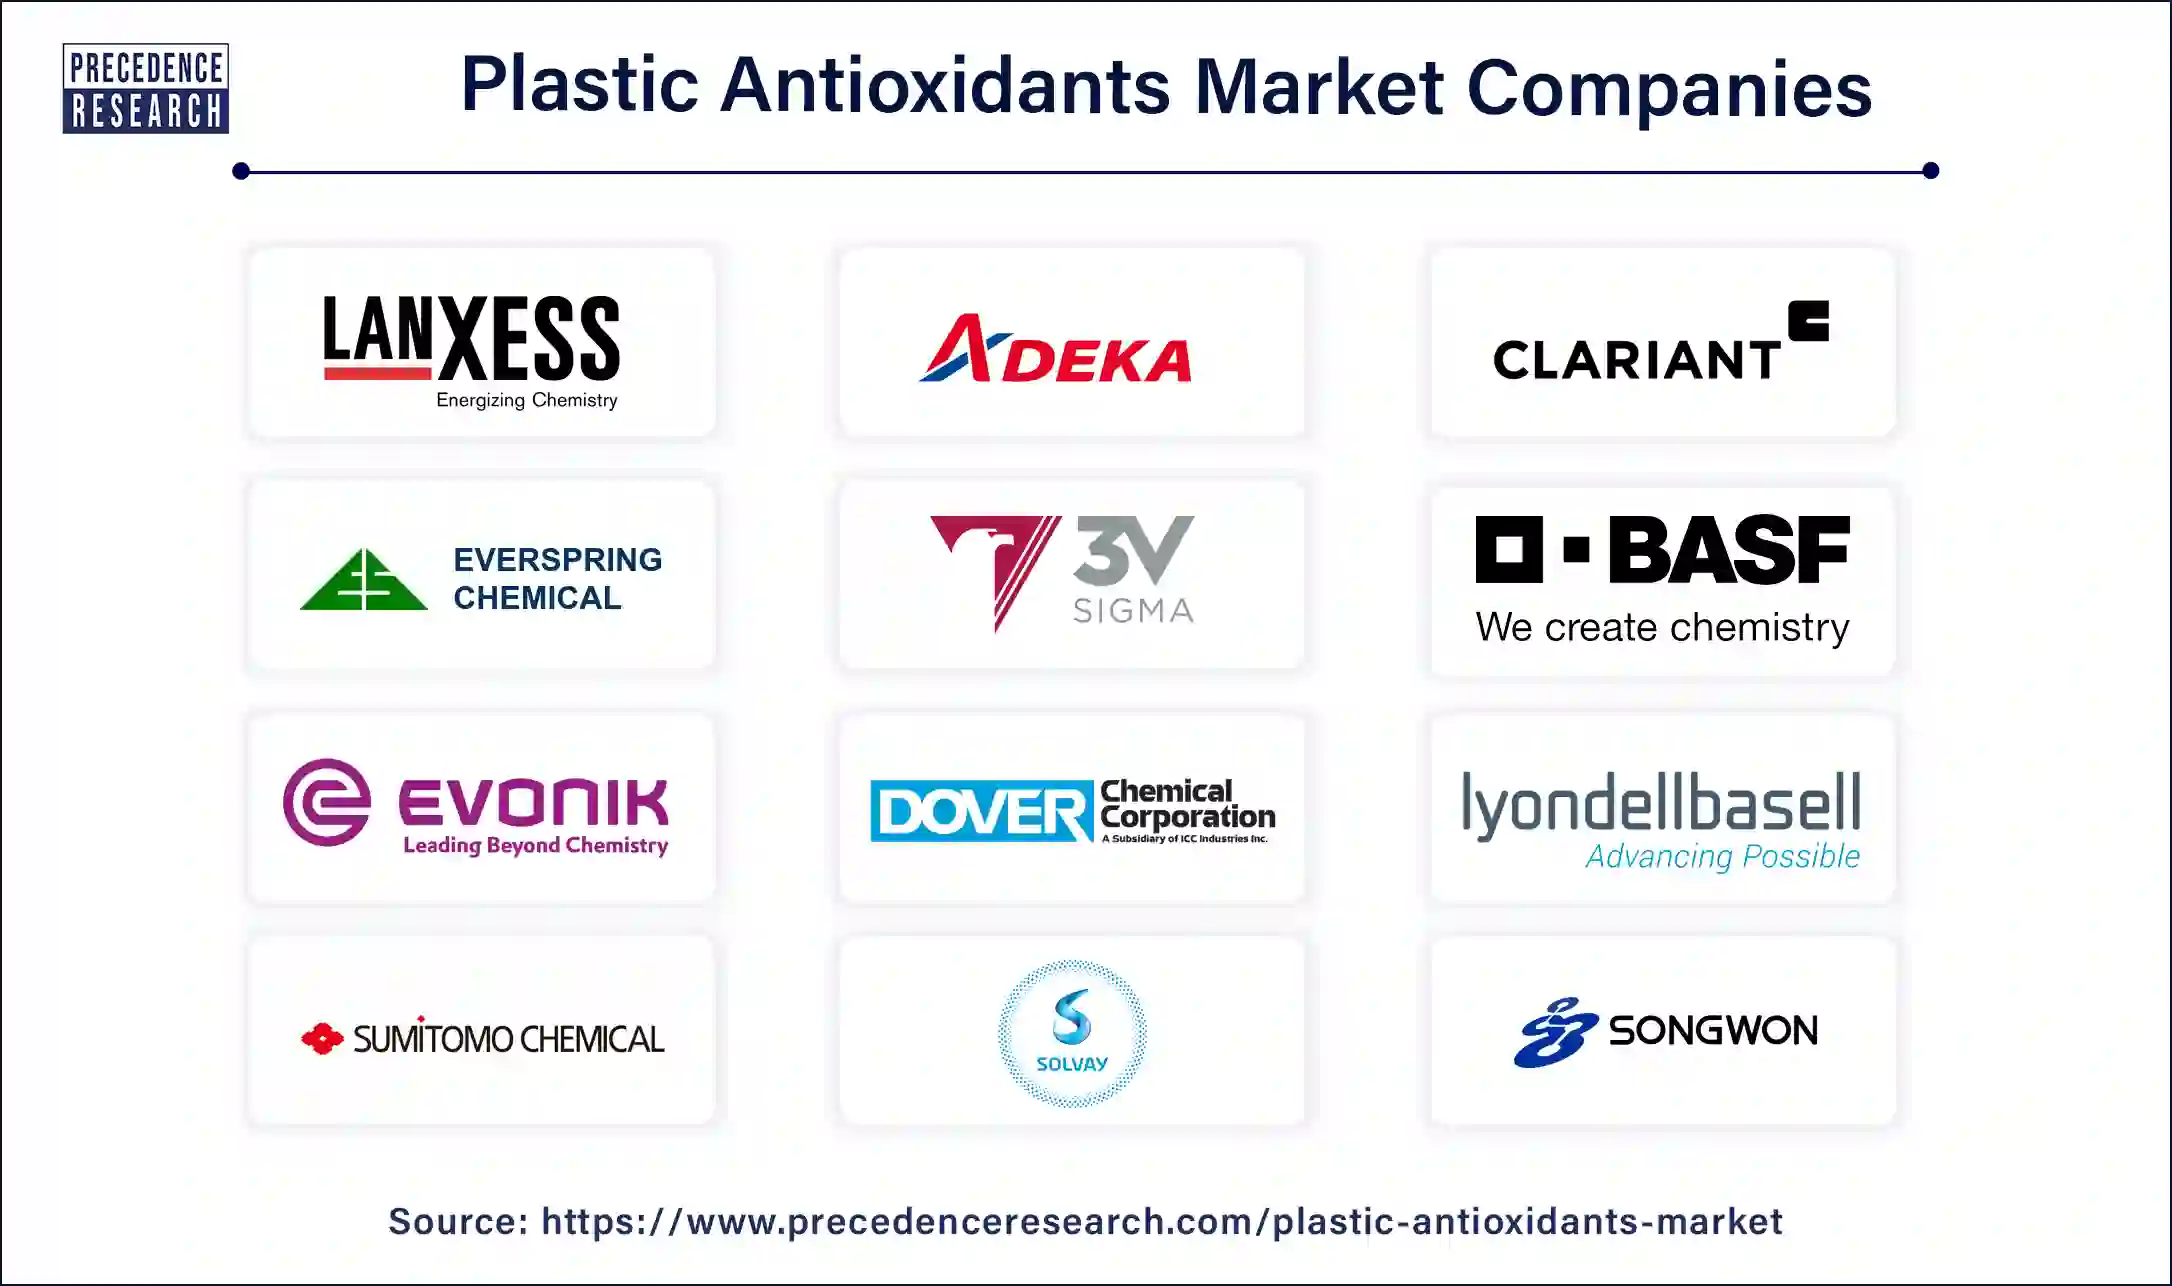 Plastic Antioxidants Companies